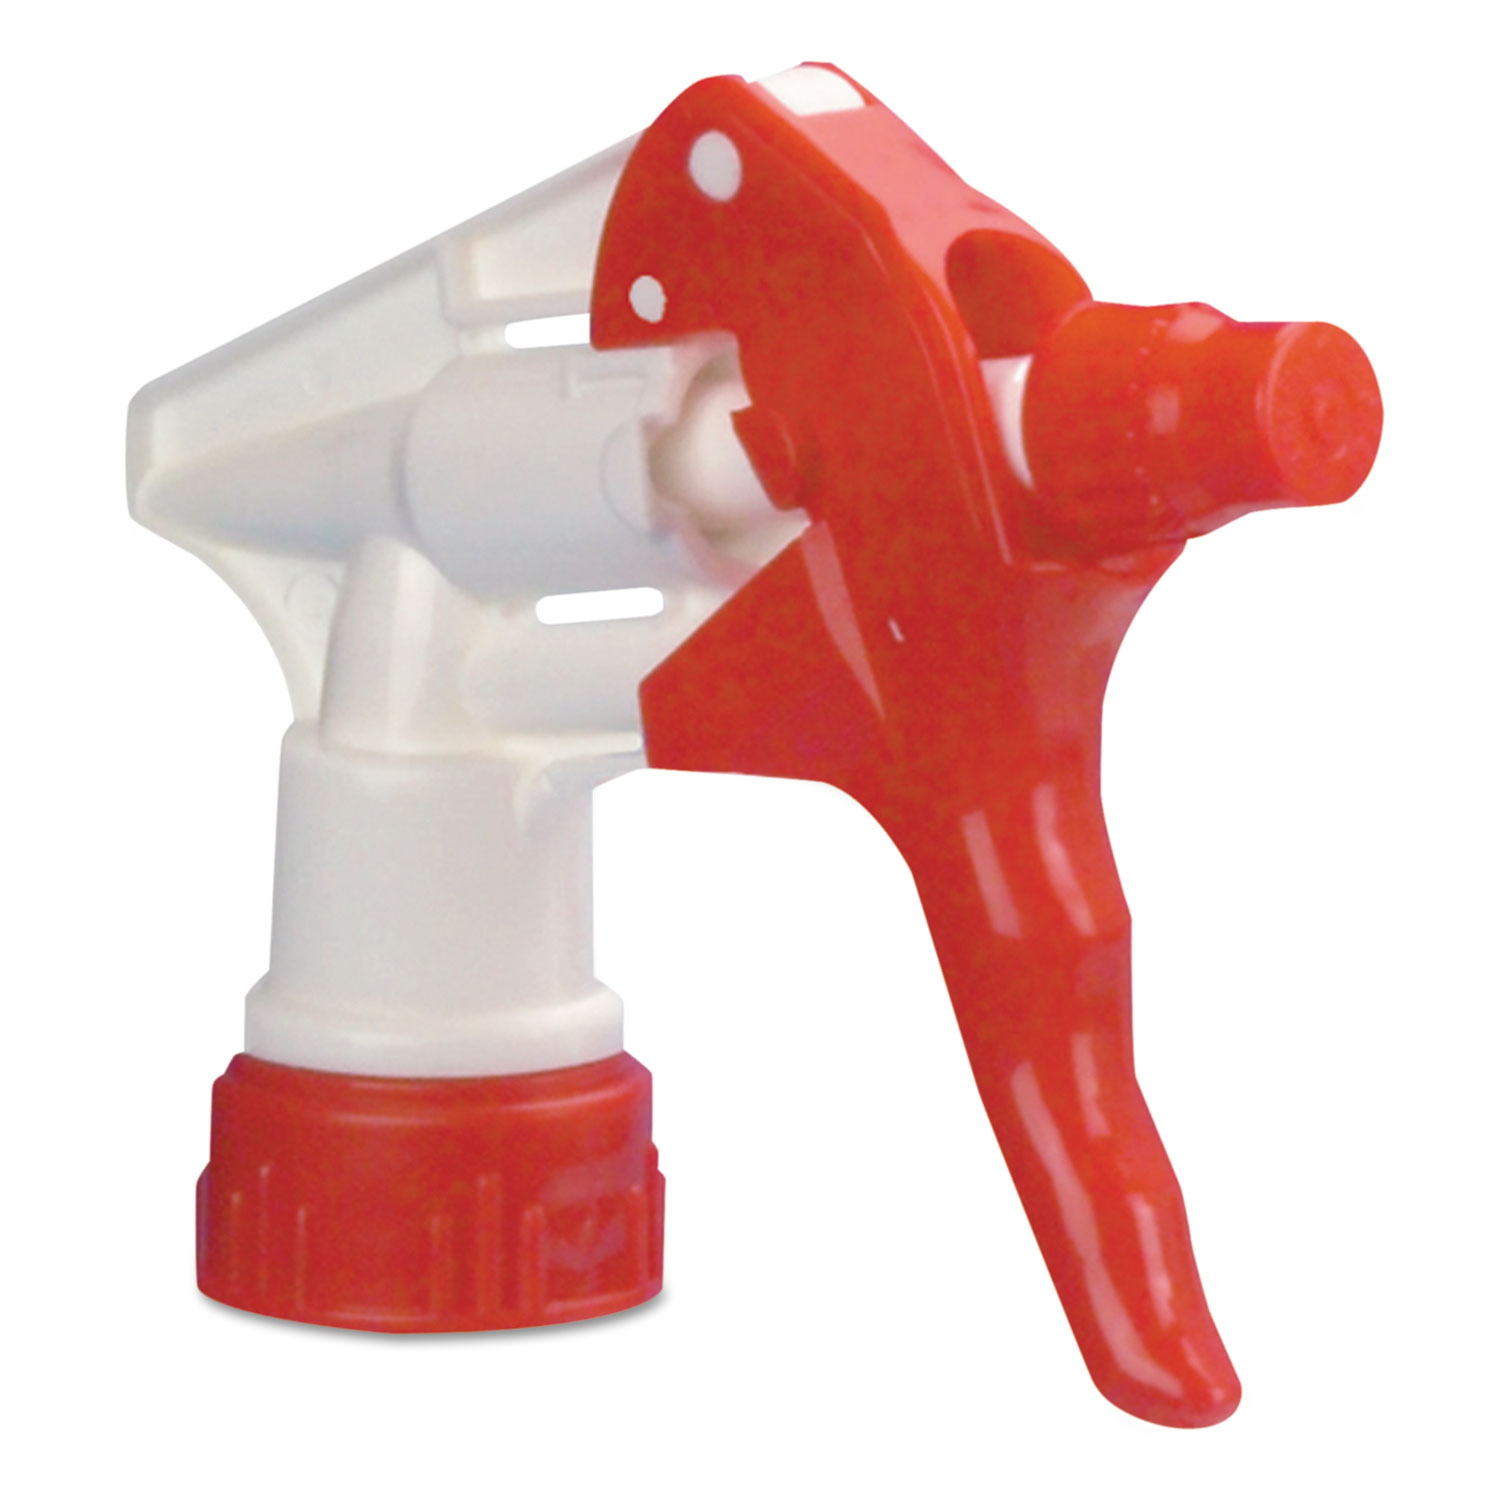  Boardwalk BWK09227 Trigger Sprayer 250 for 16-24 oz Bottles, Red/White, 8Tube, 24/Carton (BWK09227) 